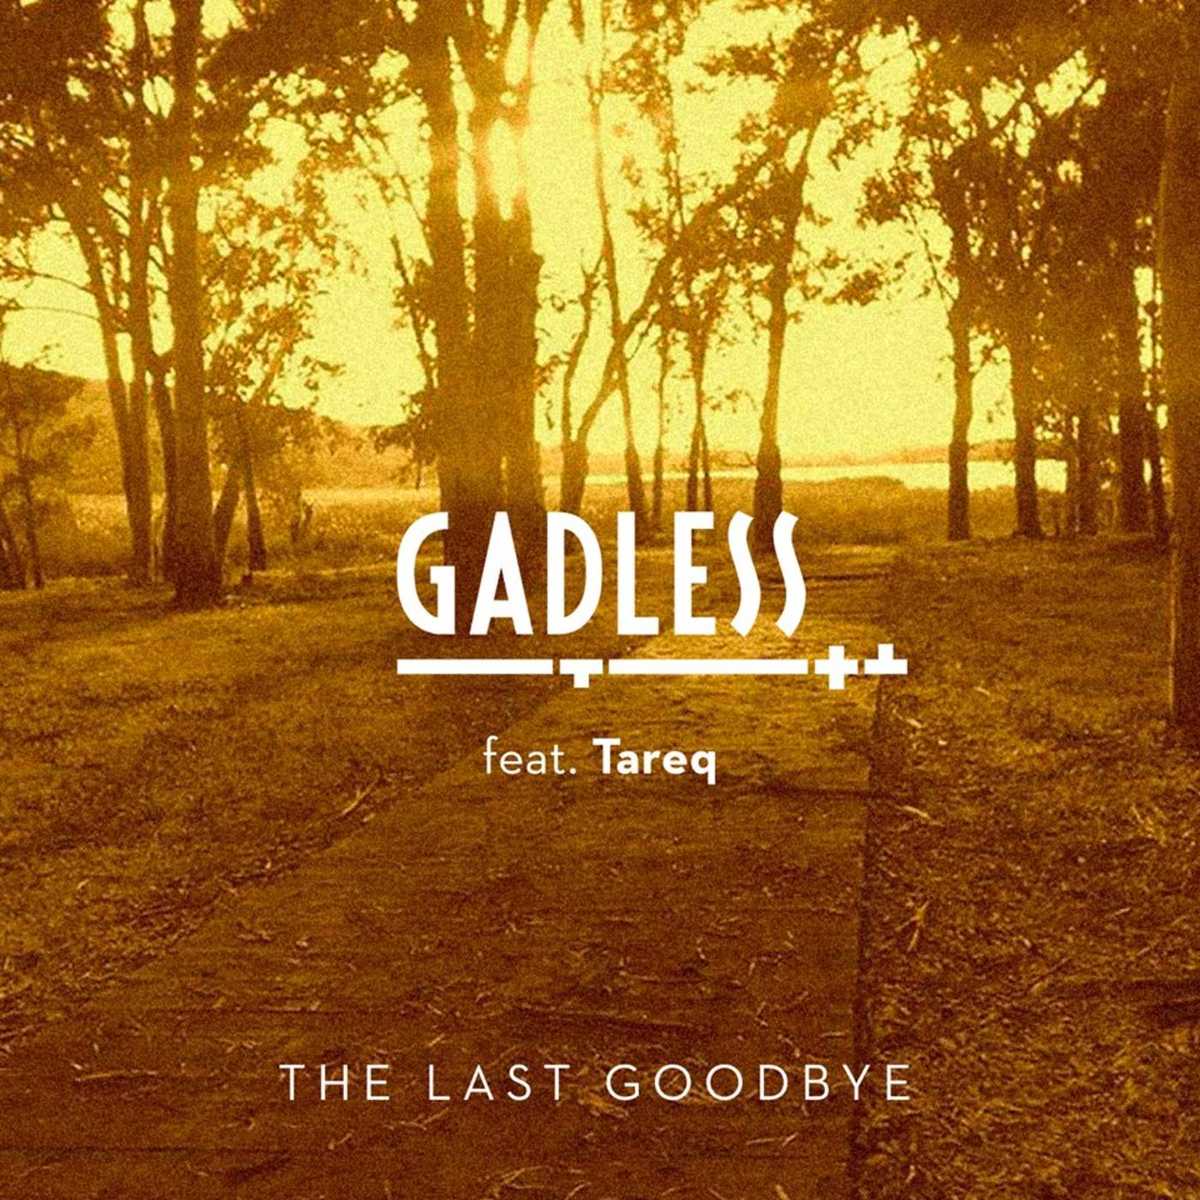 Gadless ft Tareq - The last goodbye